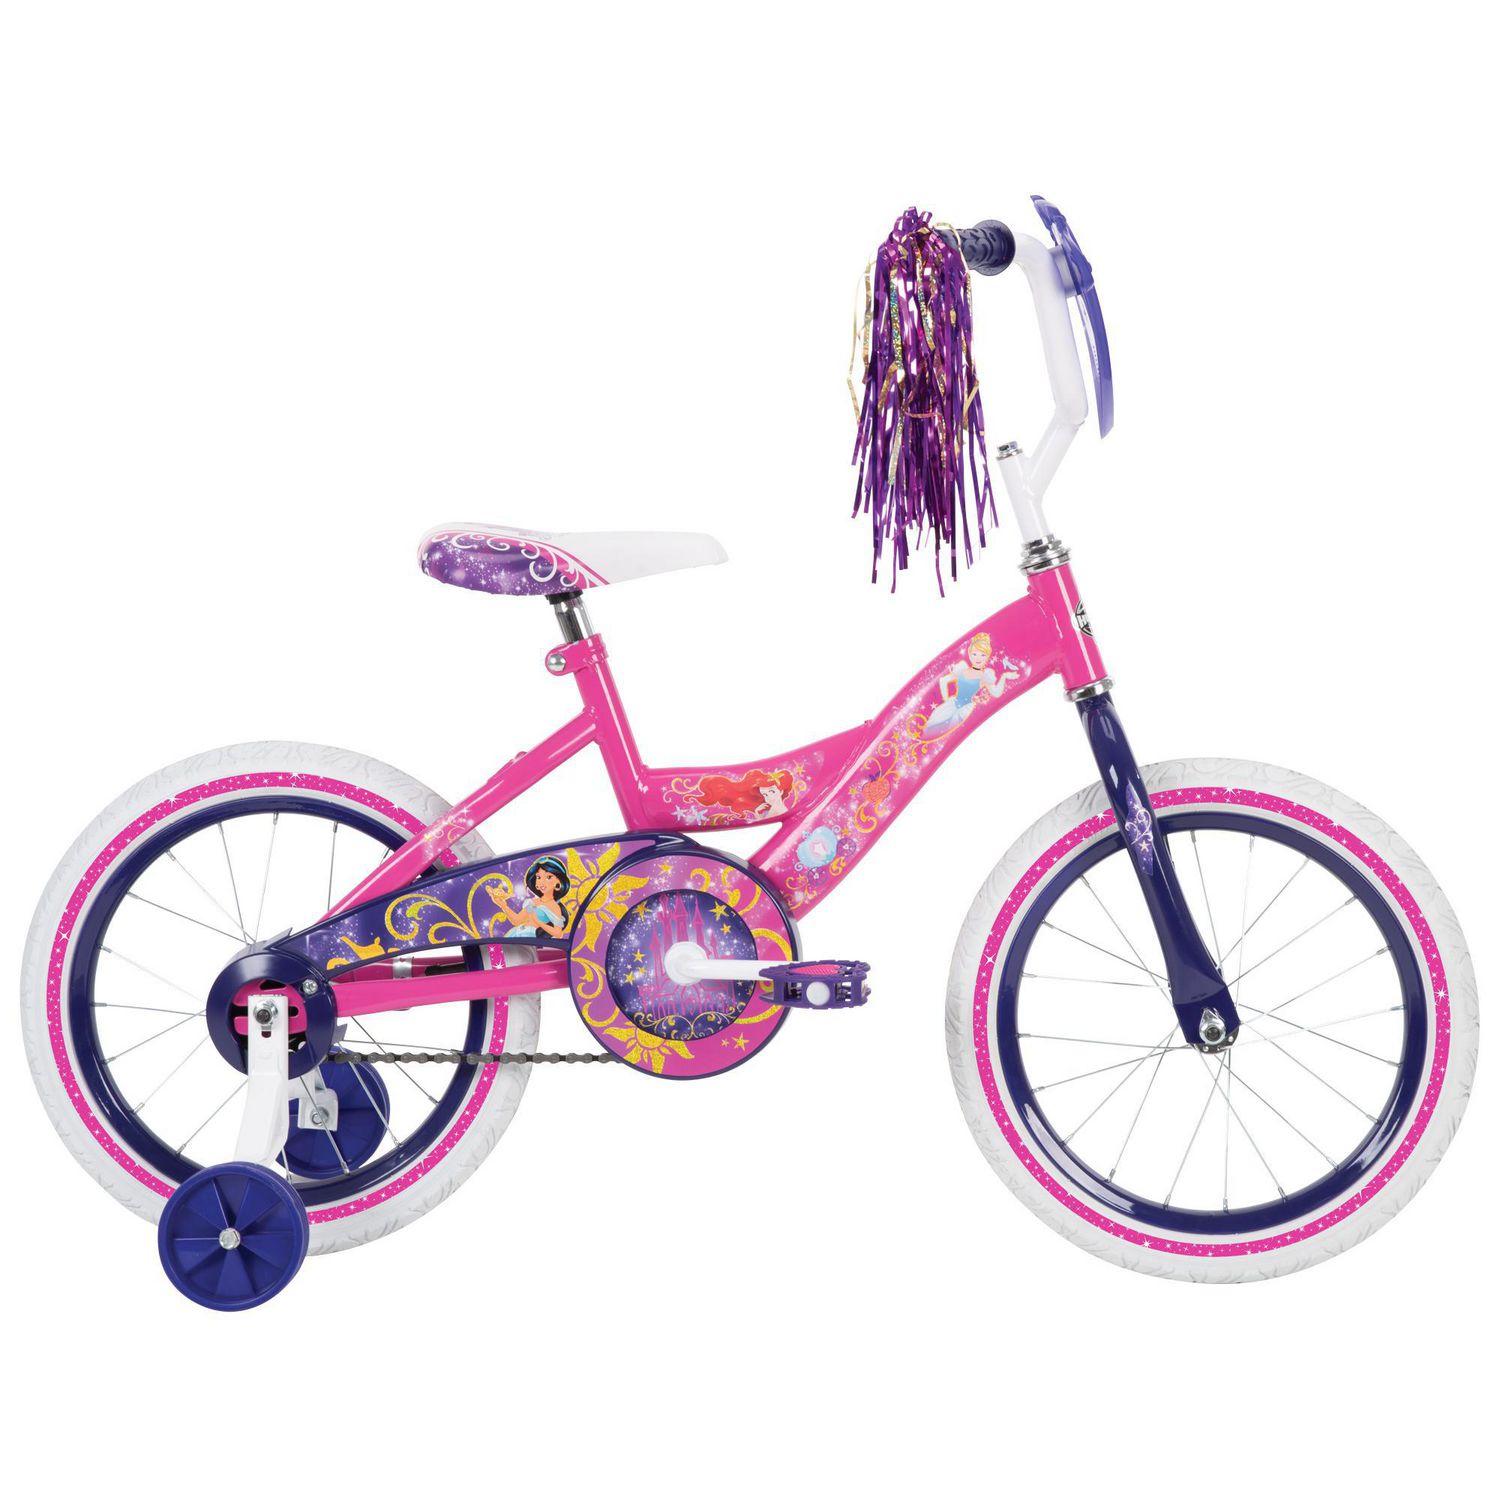 Disney Princess 16inch Girls' Bike by Huffy Walmart Canada